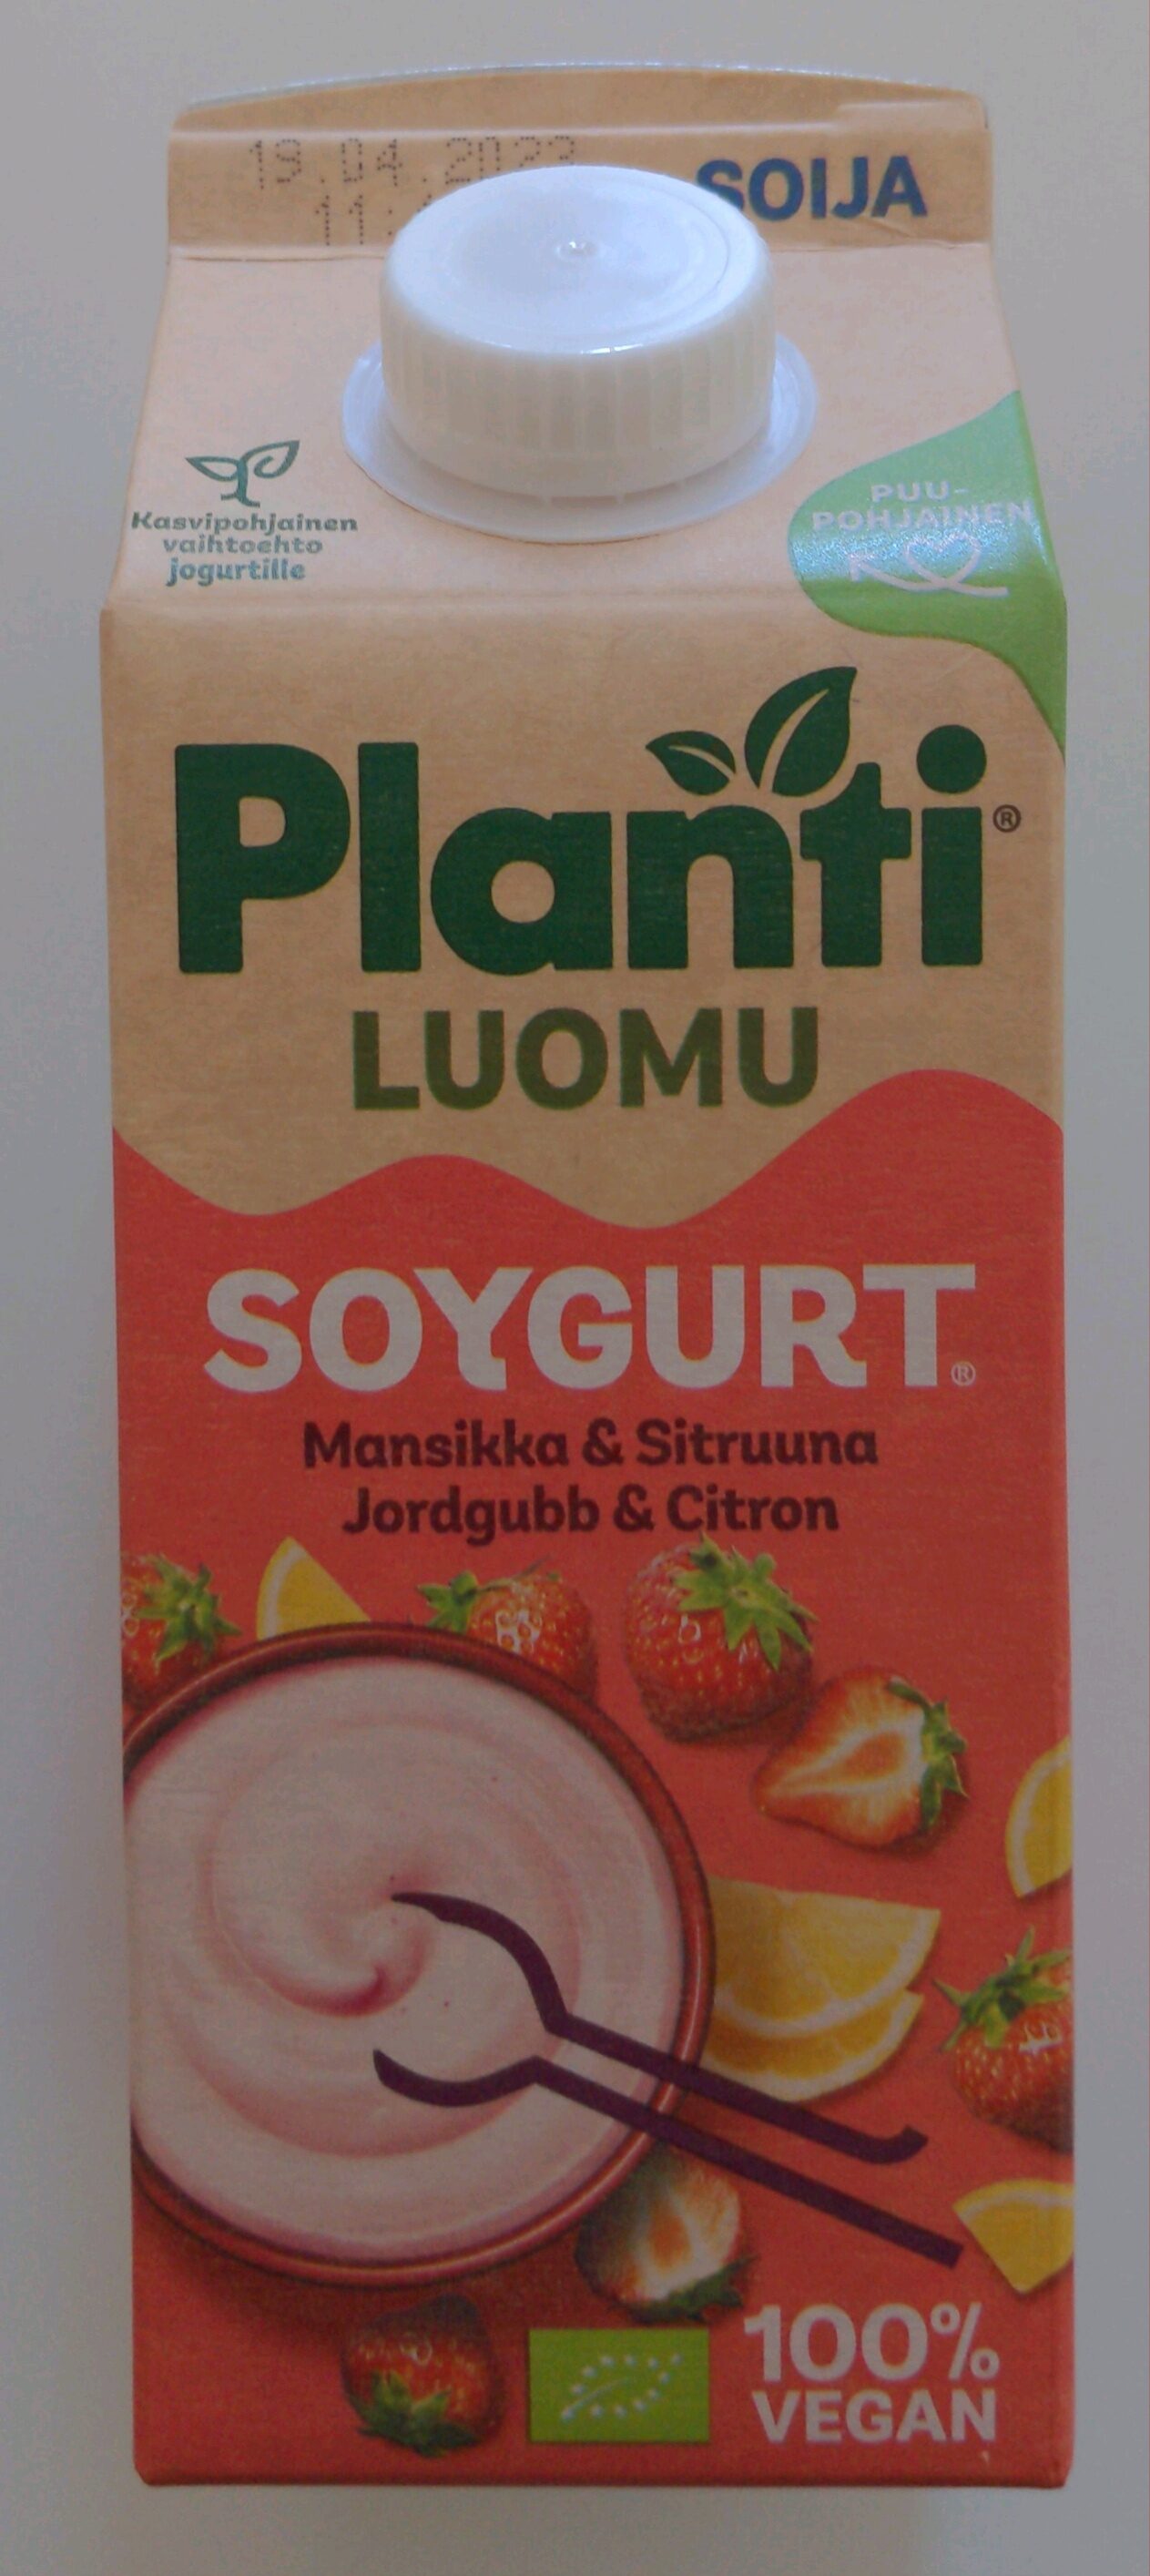 Luomu soygurt mansikka & sitruuna - Tuote